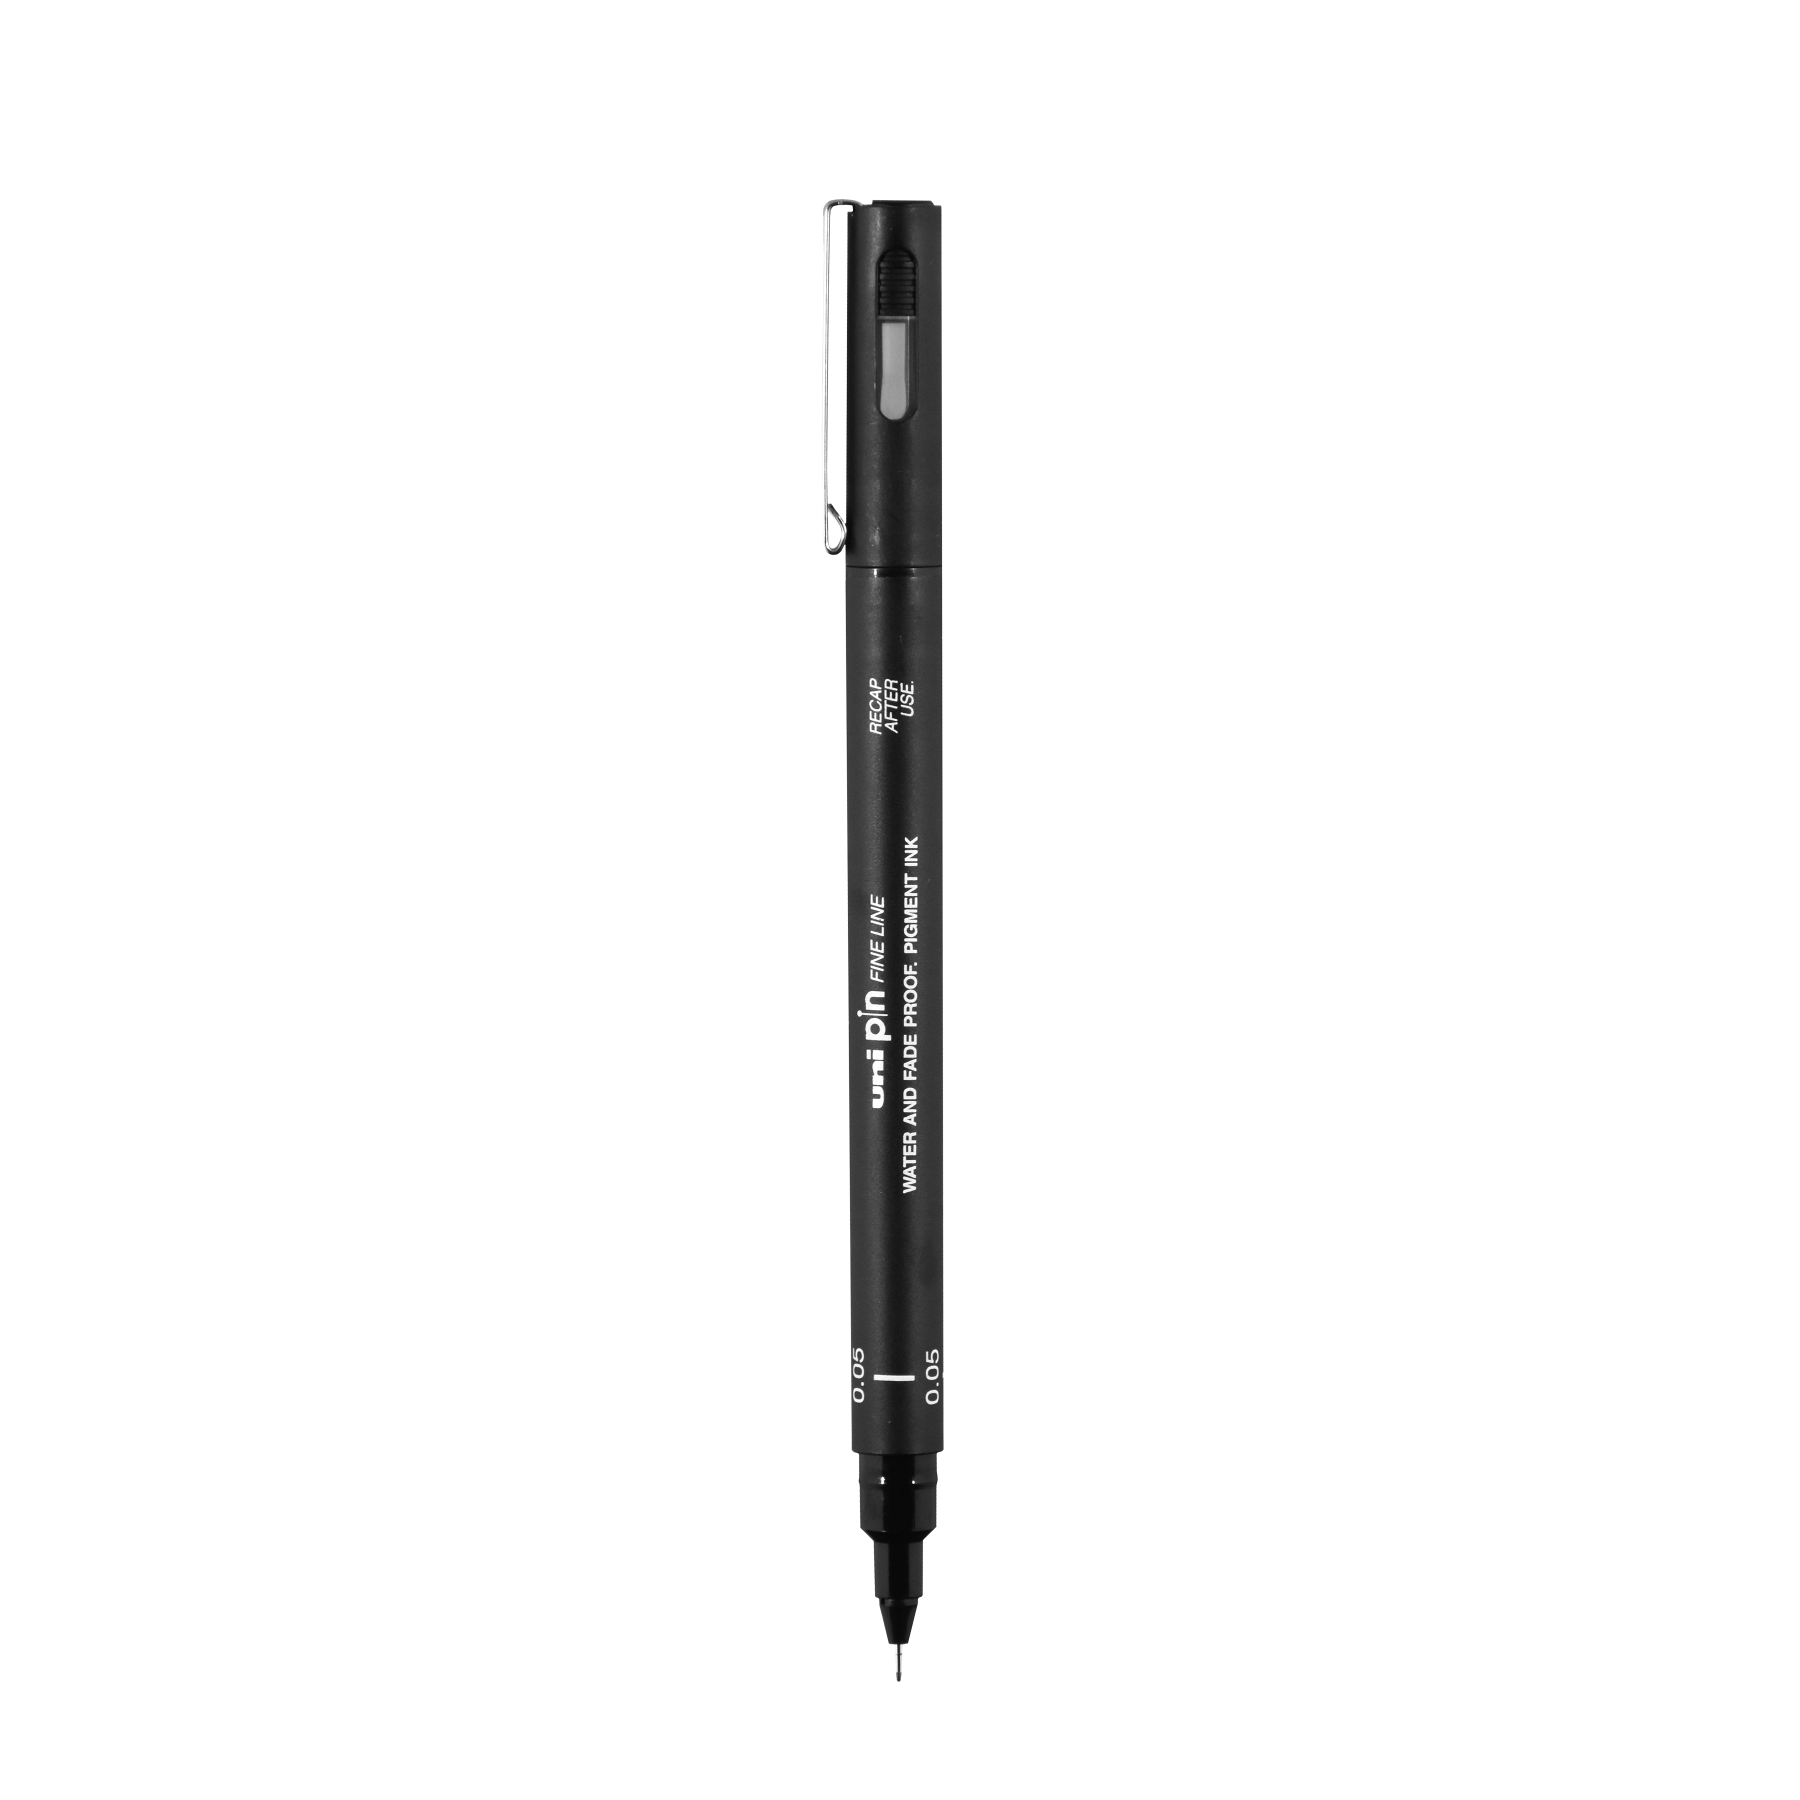 uni® Pin, Fineliner Drawing Pen (0.05mm)